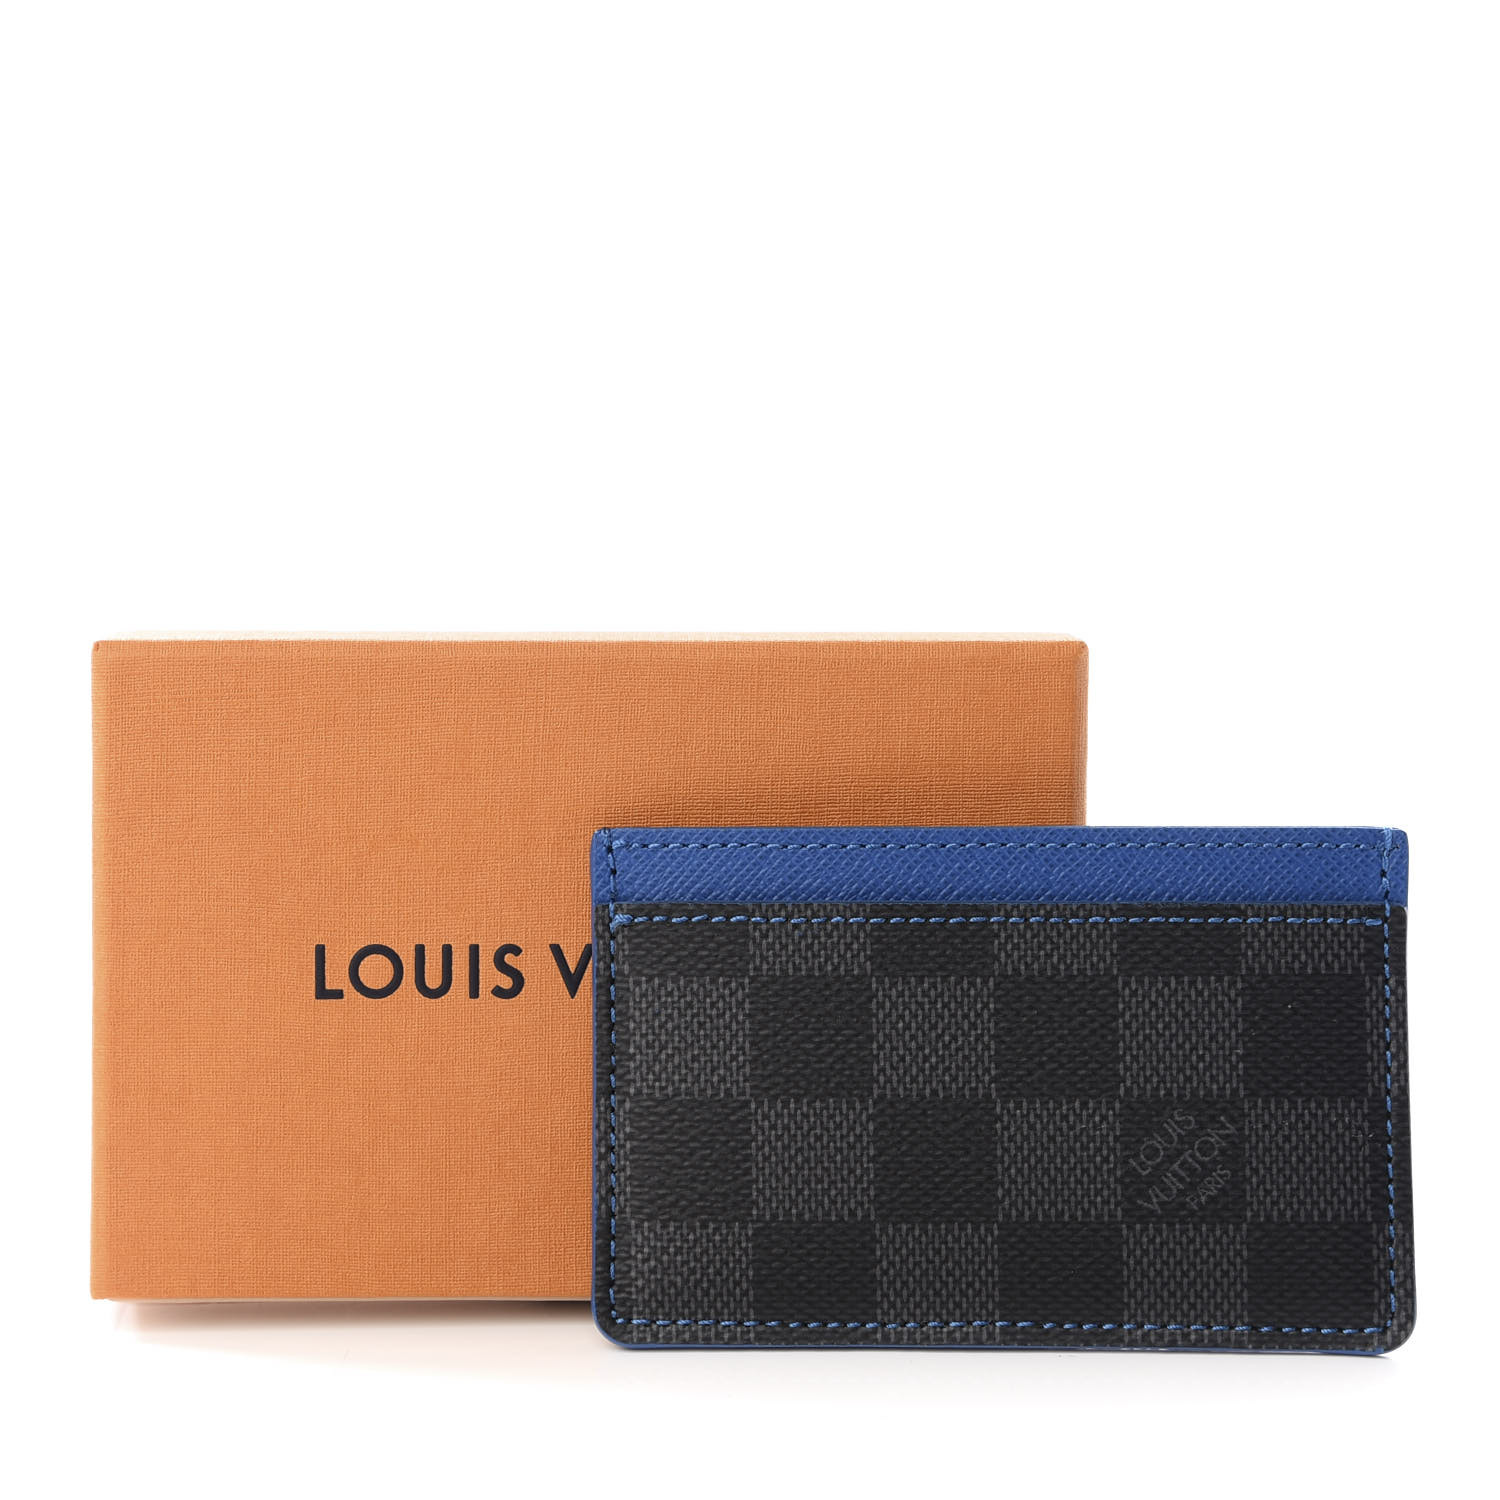 LOUIS VUITTON Damier Graphite Card Holder Blue 575146